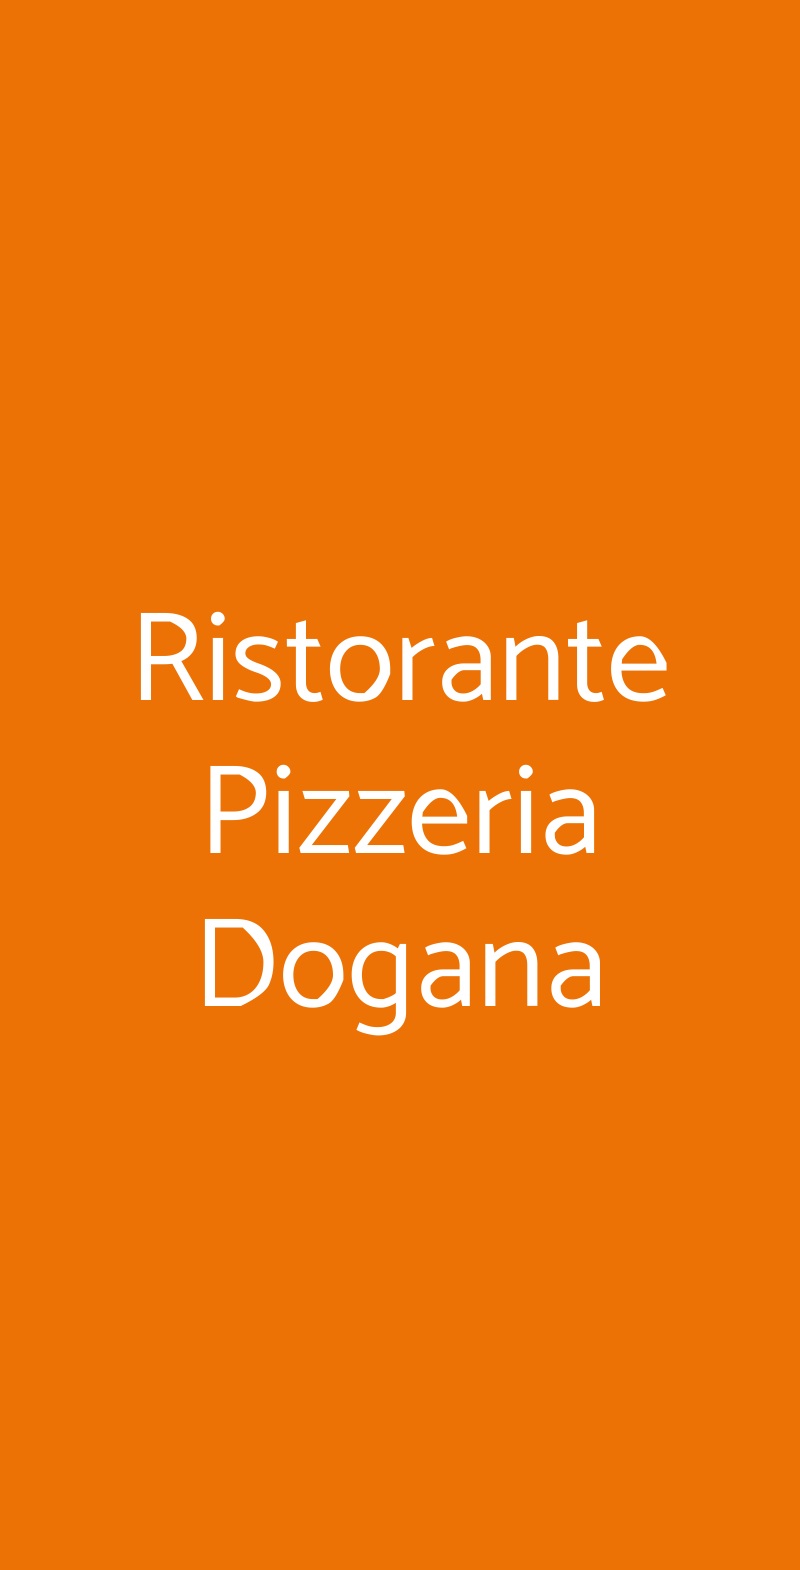 Ristorante Pizzeria Dogana Milano menù 1 pagina